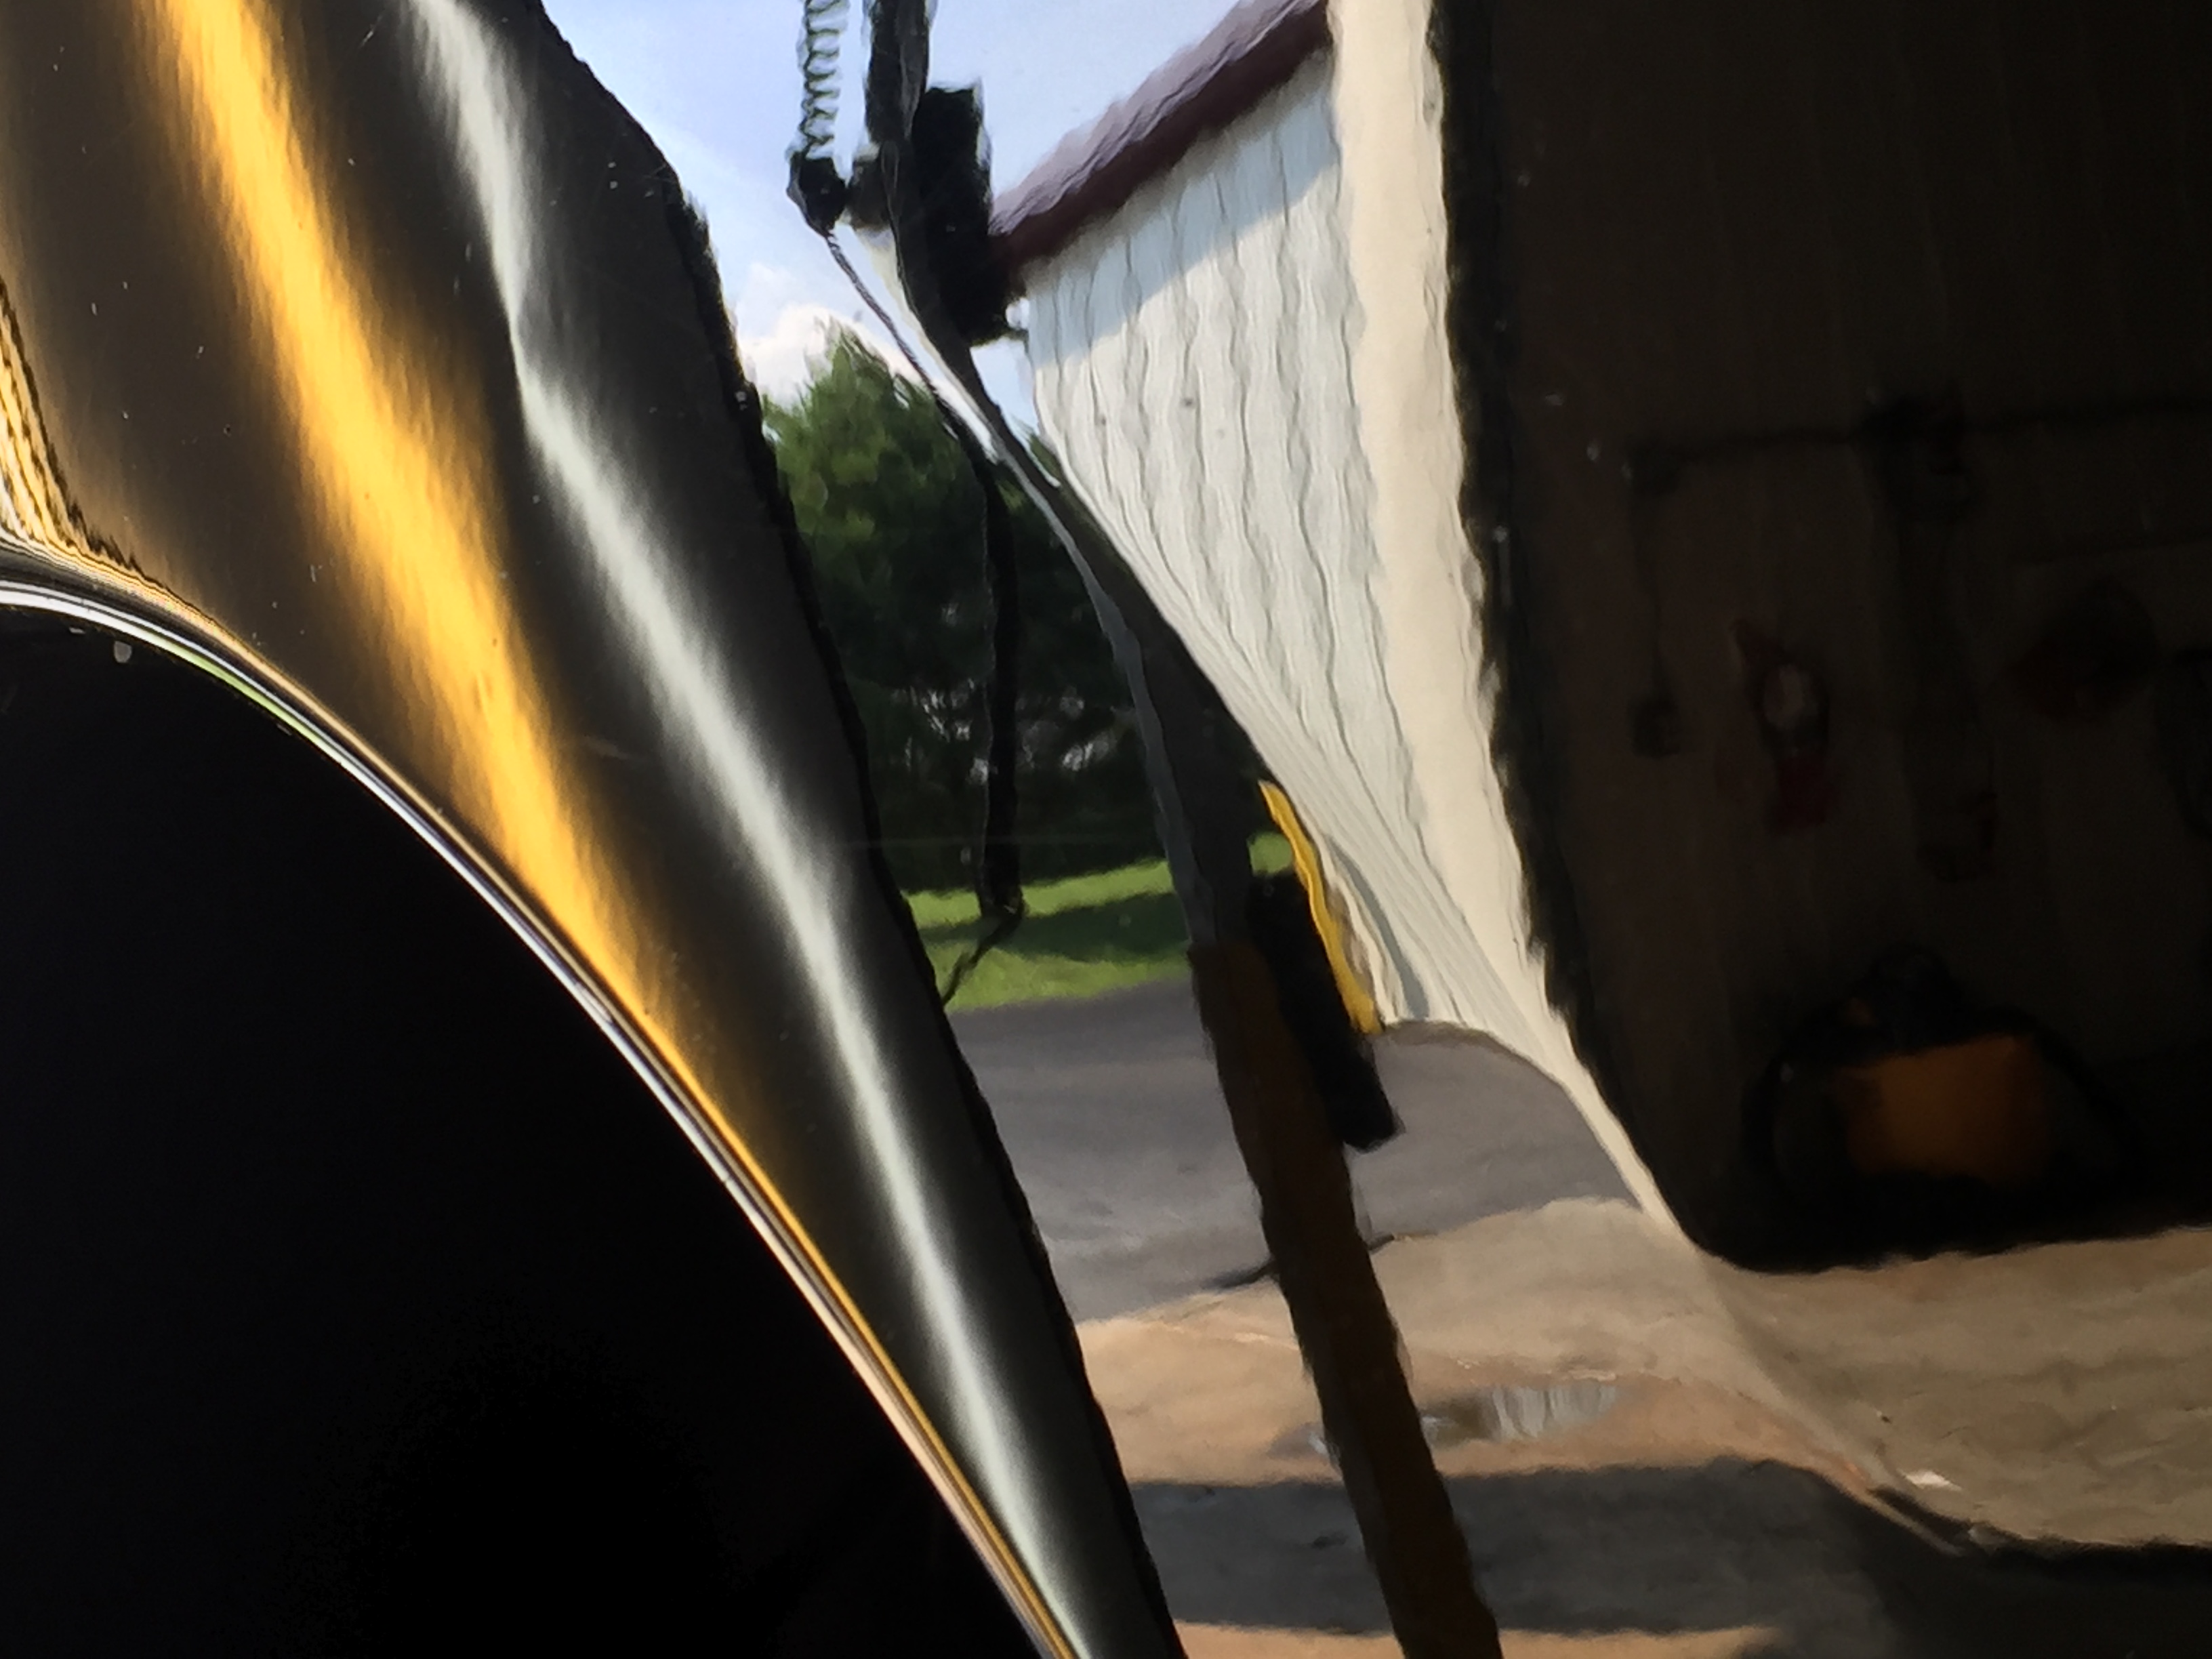 2012 Dodge Ram Bedside Damage, Paintless Dent Repair, Springfield, IL. https://217dent.com